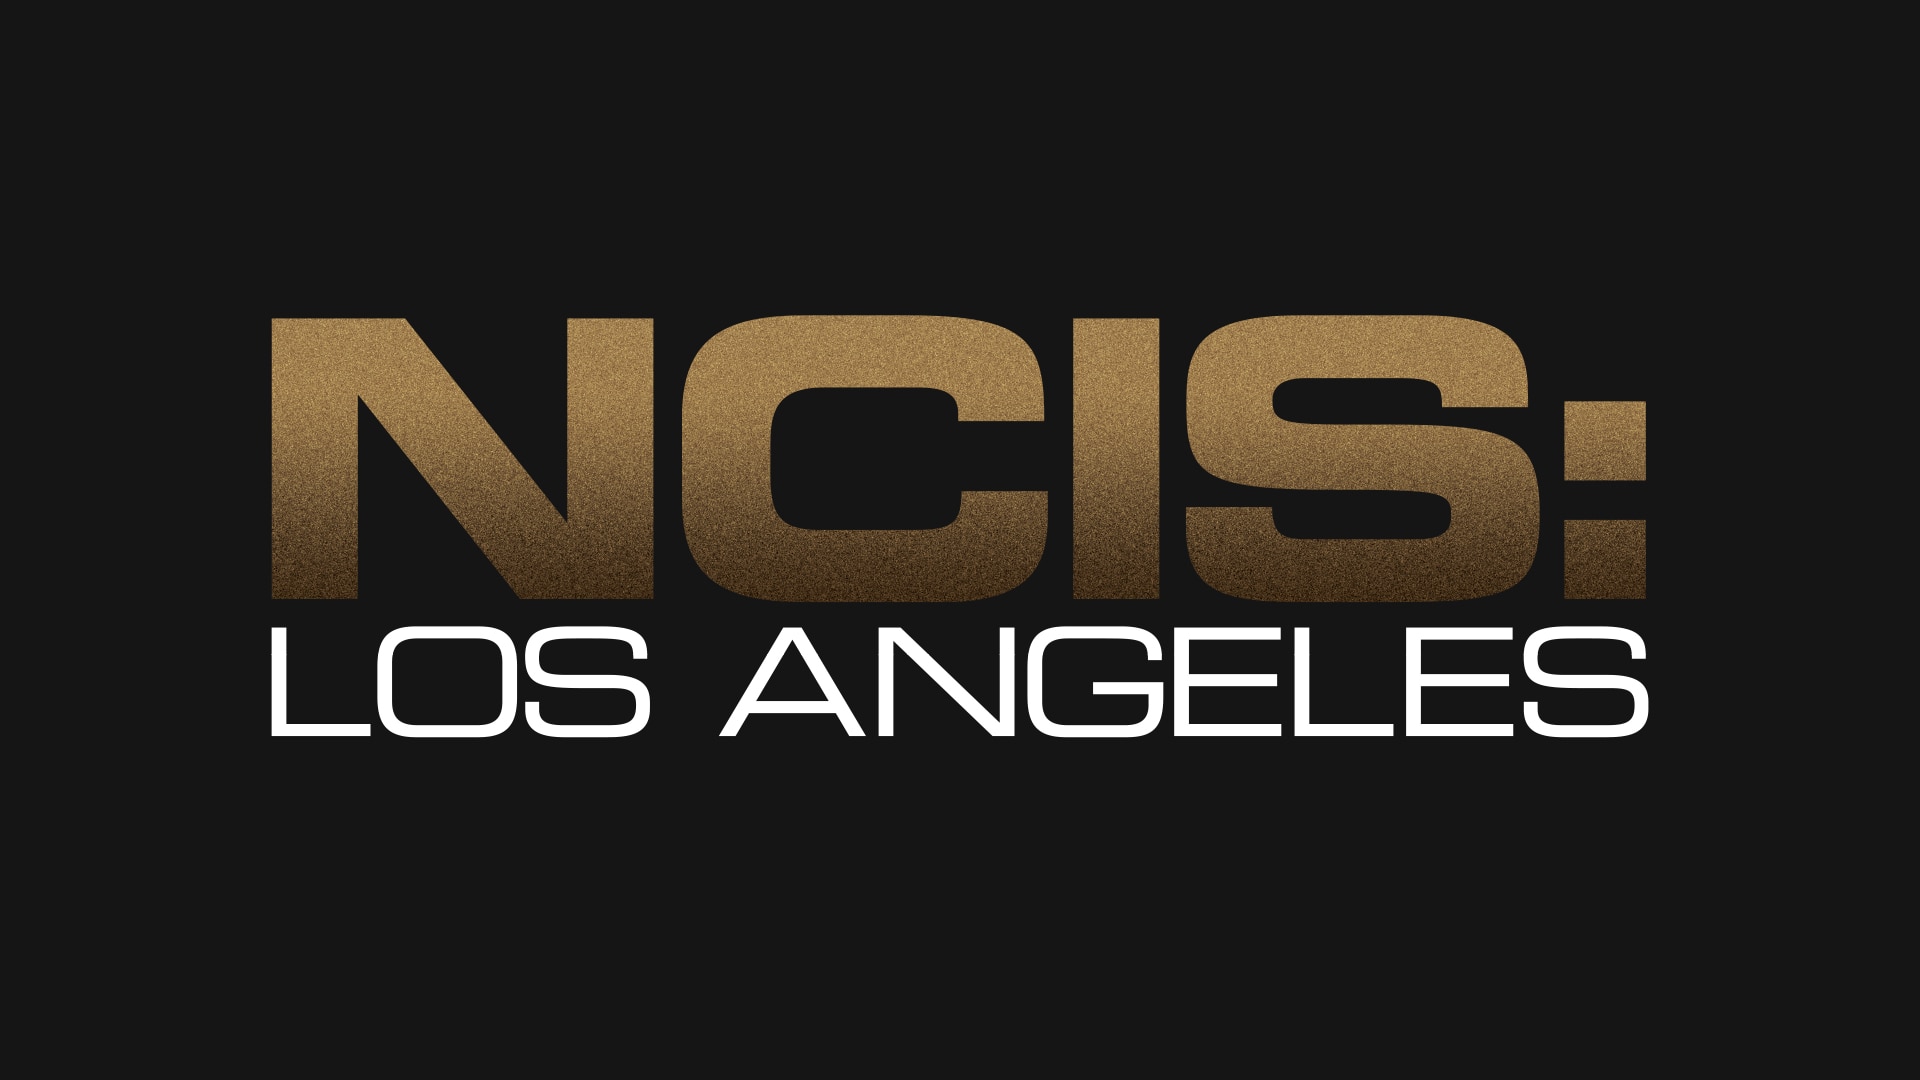 Los angeles 52 текст. Marciano los Angeles логотип. Наклейка (стикер) NCIS.